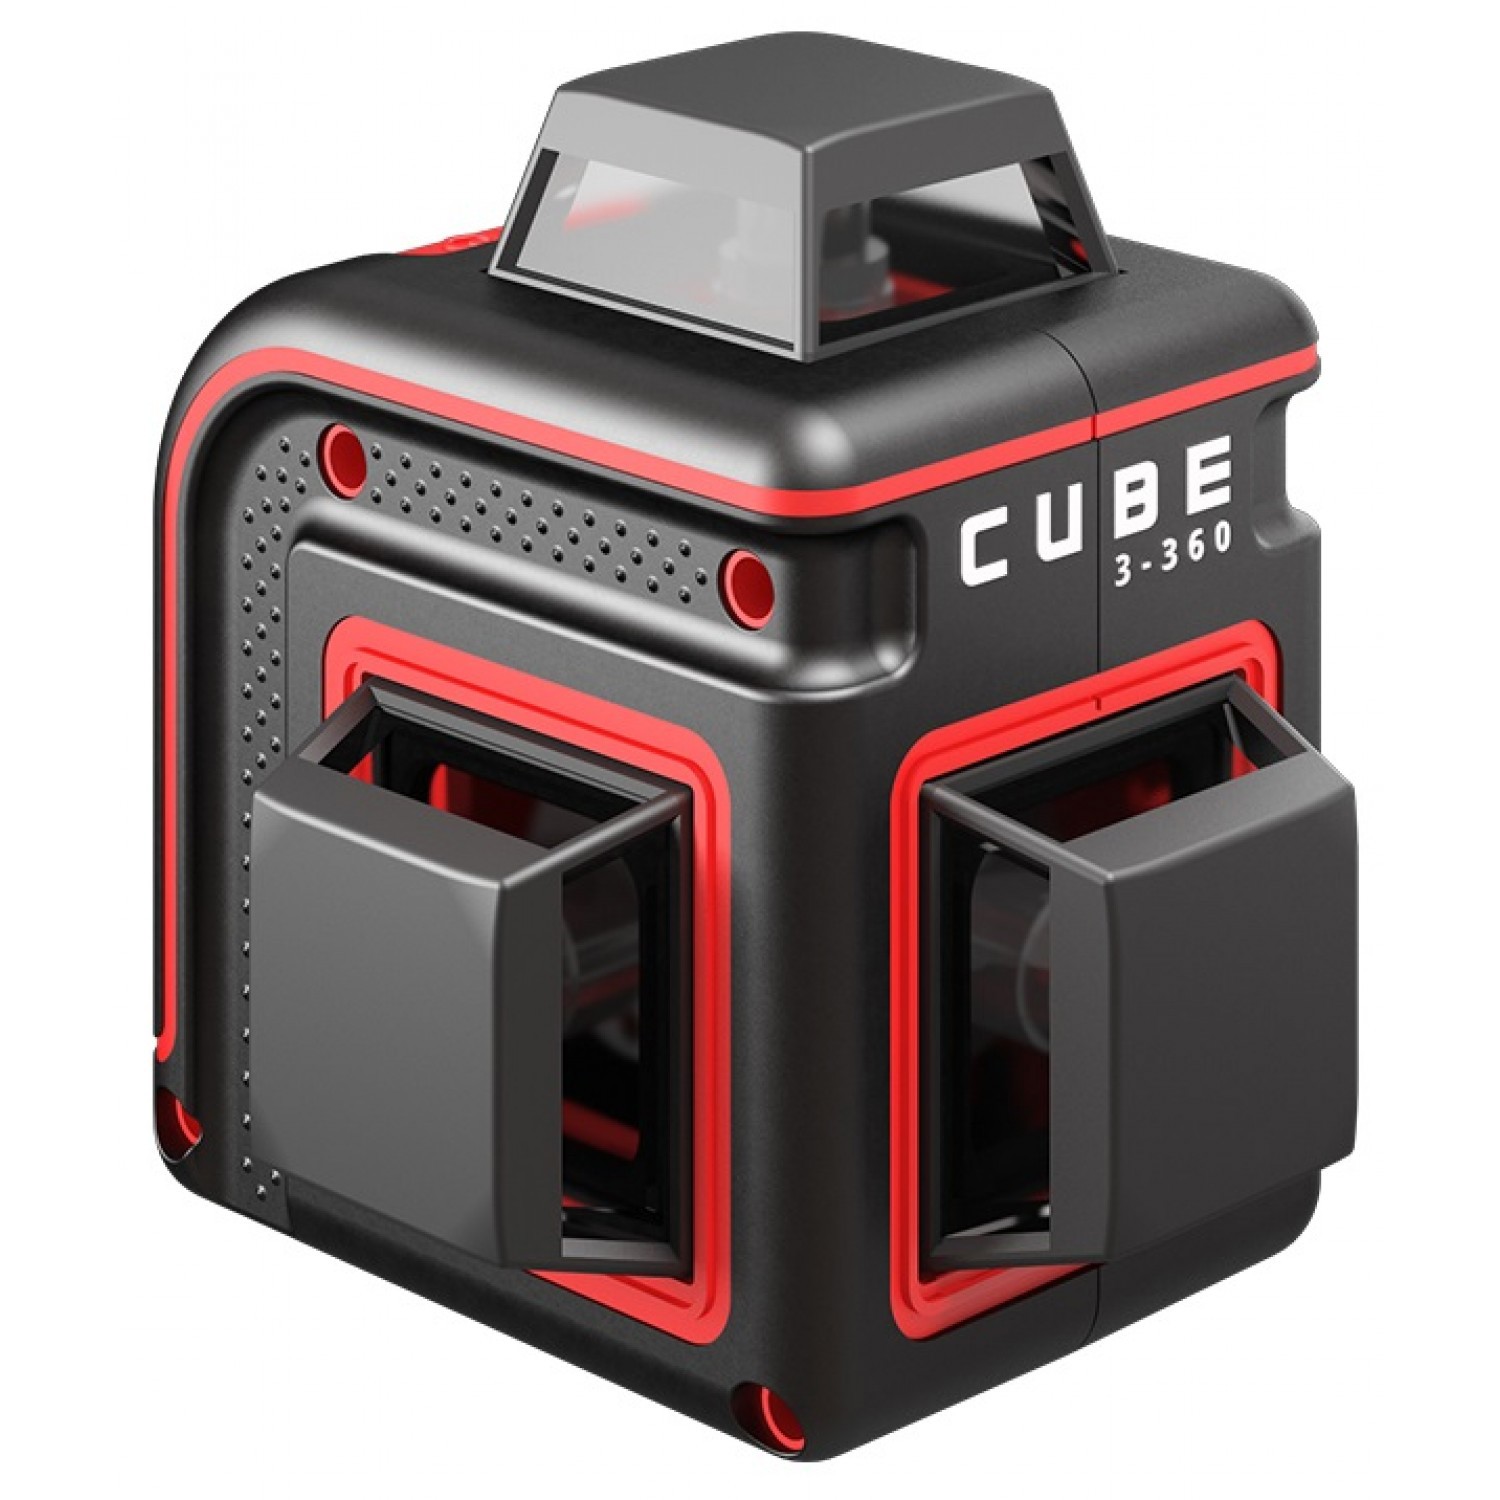 Cube mini basic edition. Лазерный уровень ada Cube 3-360 Home Edition а00565. Нивелир лазерный ada Cube 360 professional Edition. Лазерный уровень ada Cube 360 Basic Edition. Лазерный уровень ada Cube 3-360 Green Basic Edition.